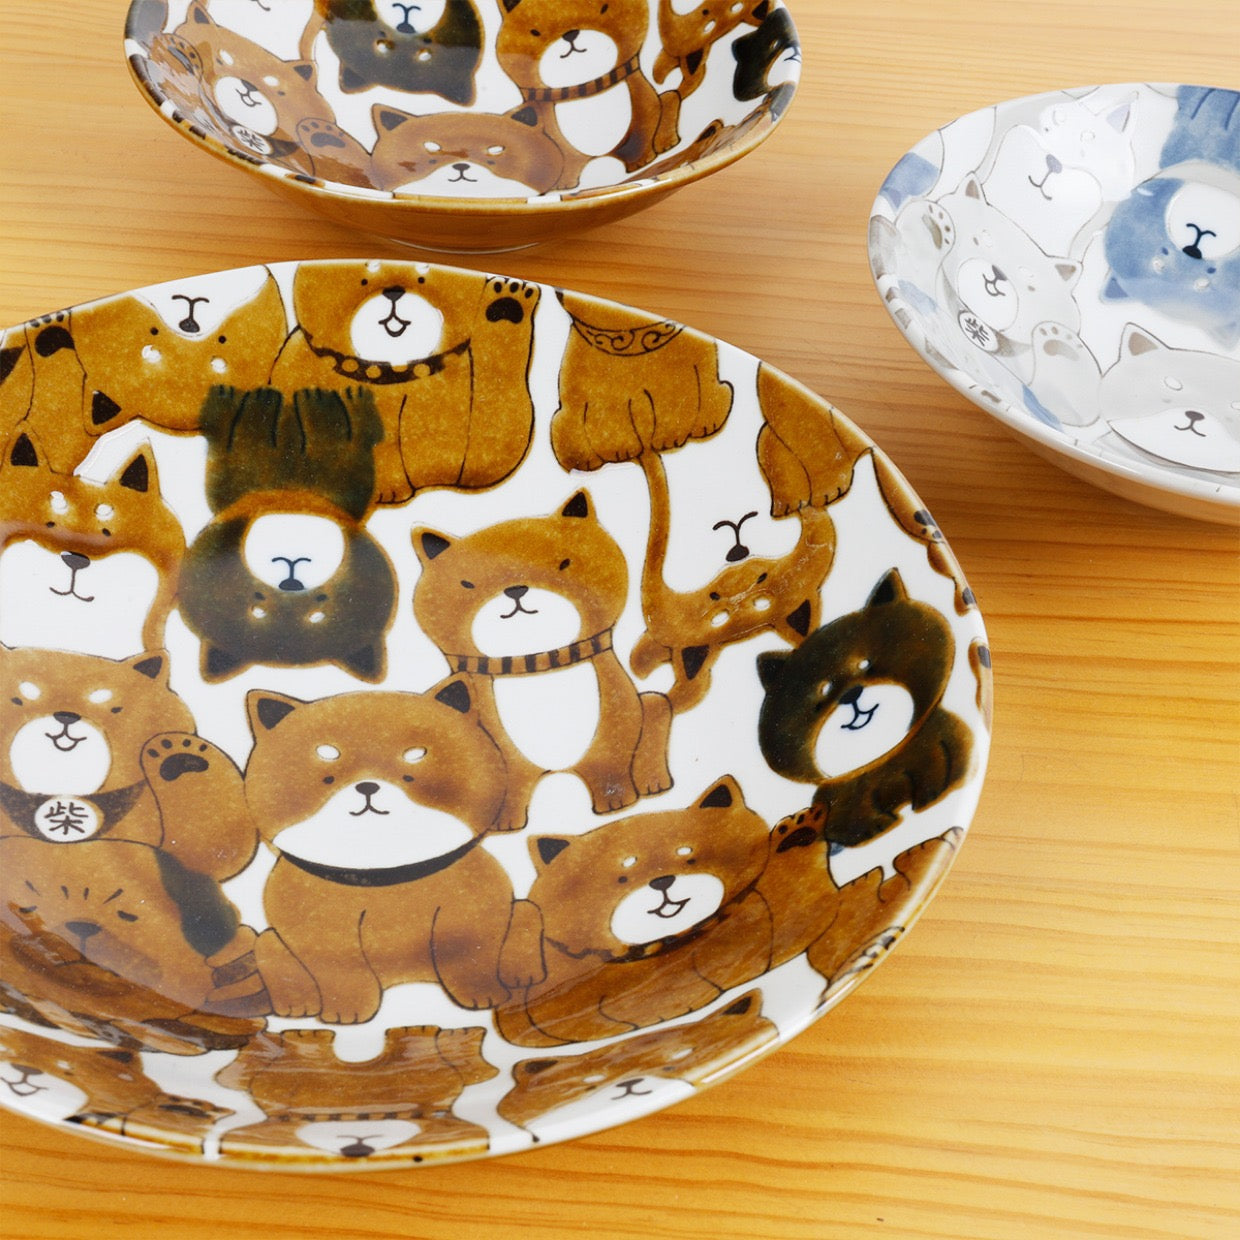 Minoyaki Shiba-Inu Caramel/ Gray Dining Plates